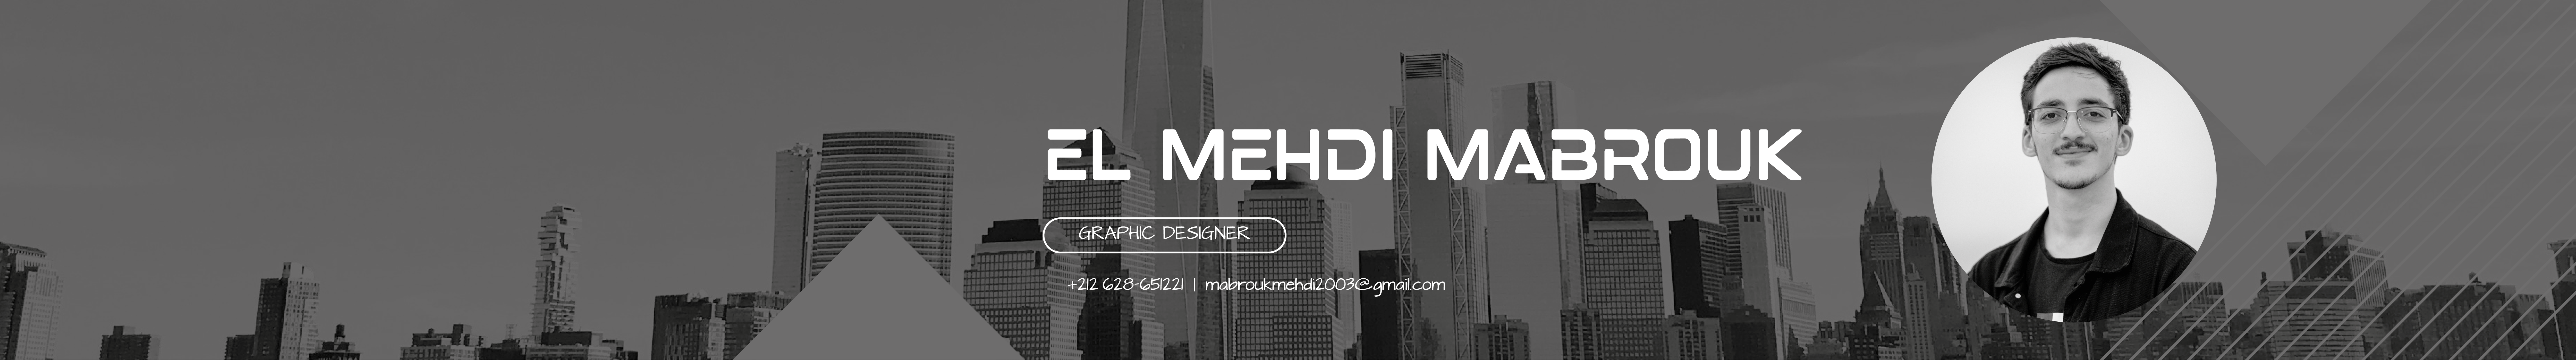 El Mehdi Mabrouk's profile banner